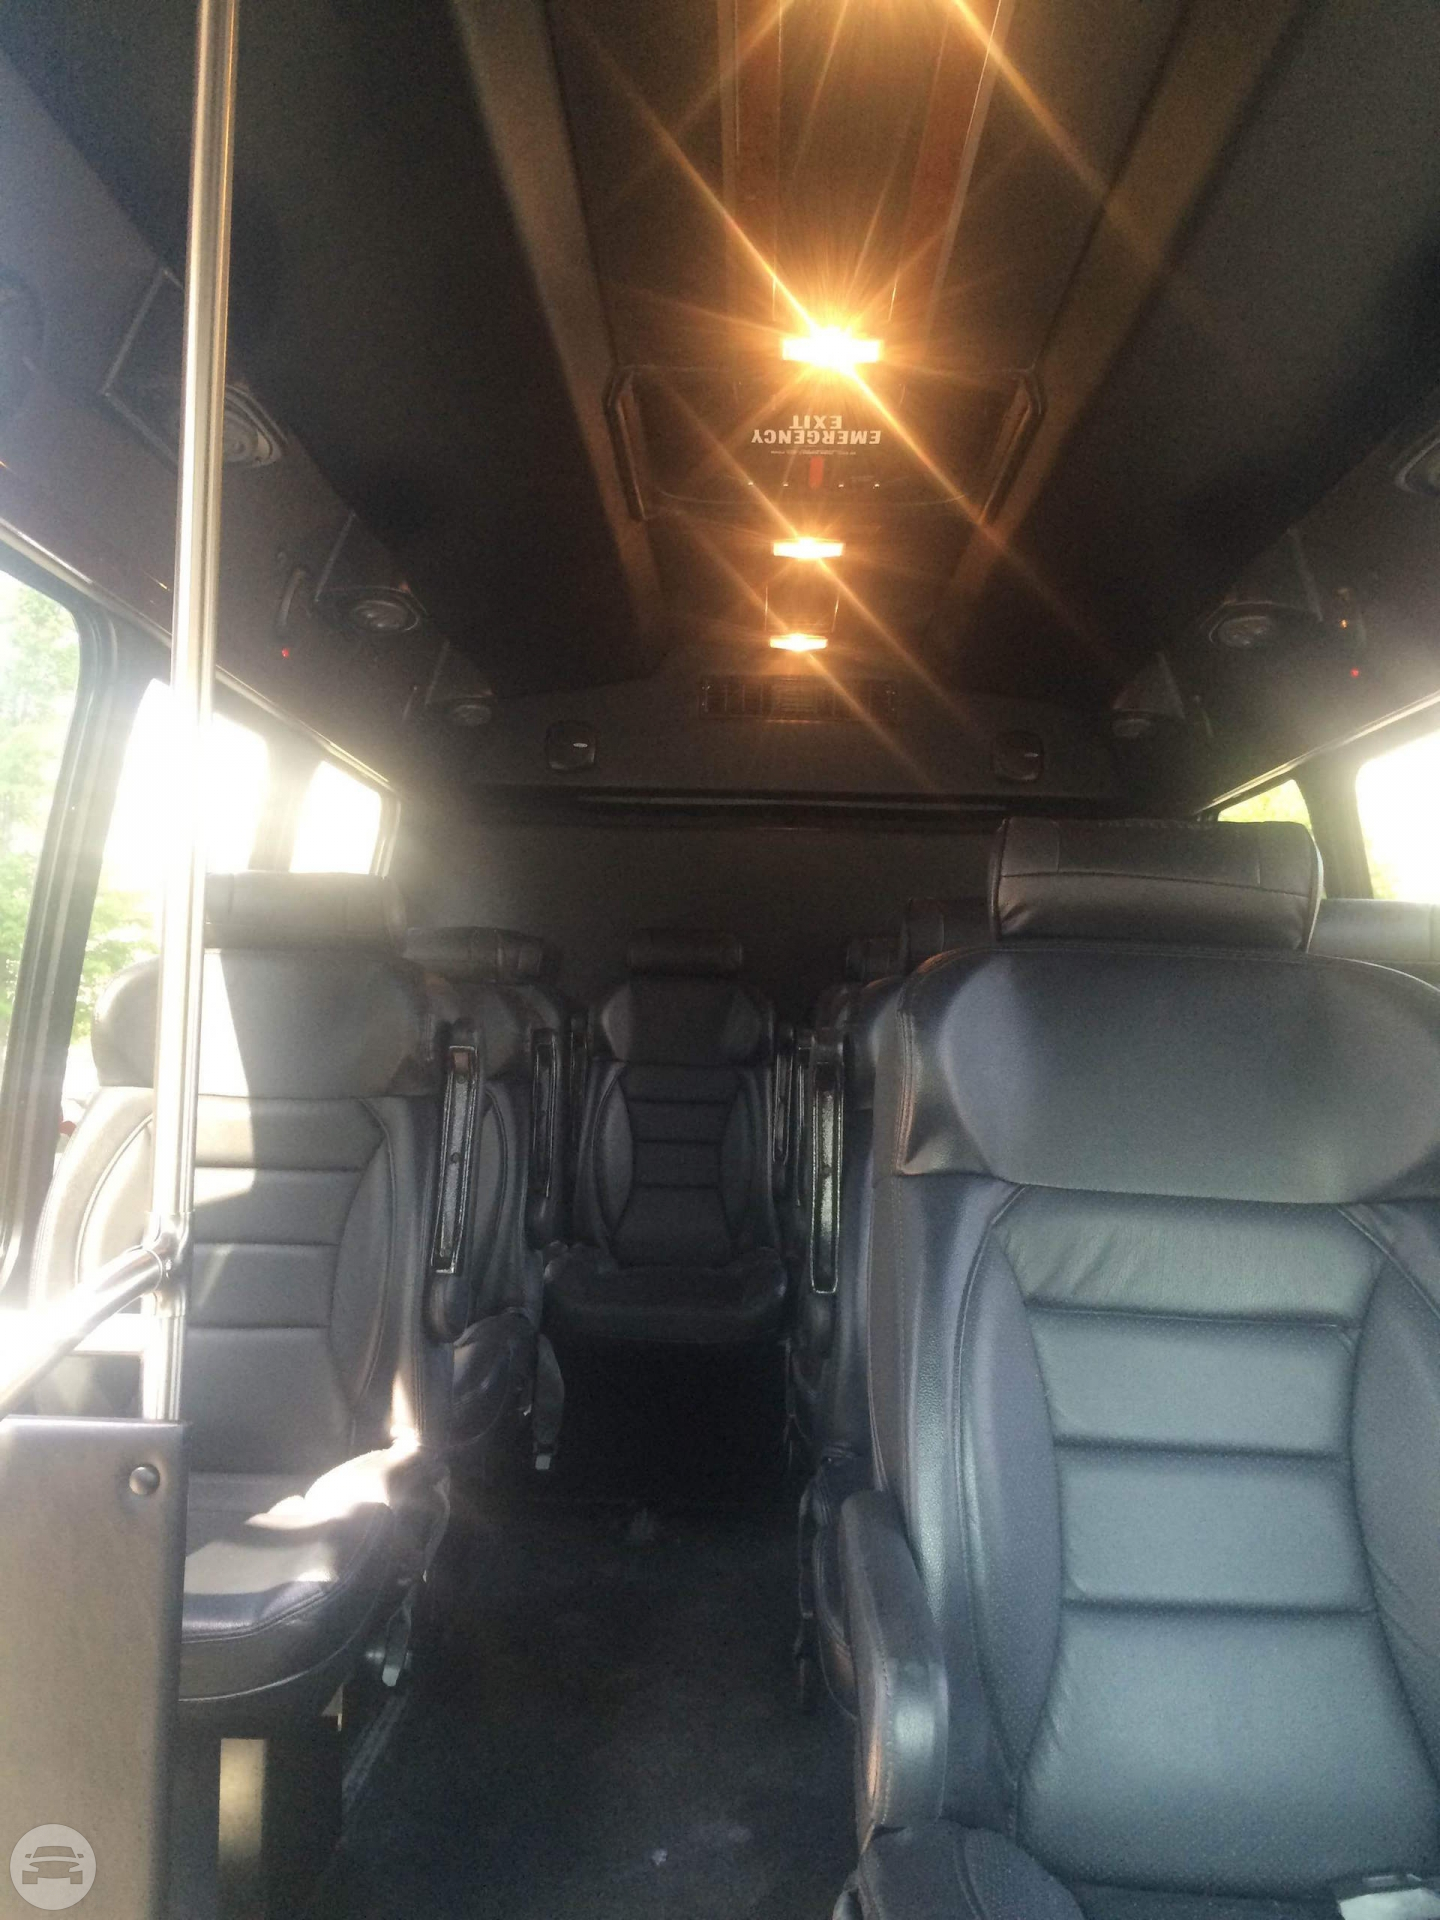 16 Passenger Executive Van, Handicap Accessibility
Van /
Fayetteville, AR

 / Hourly $0.00
